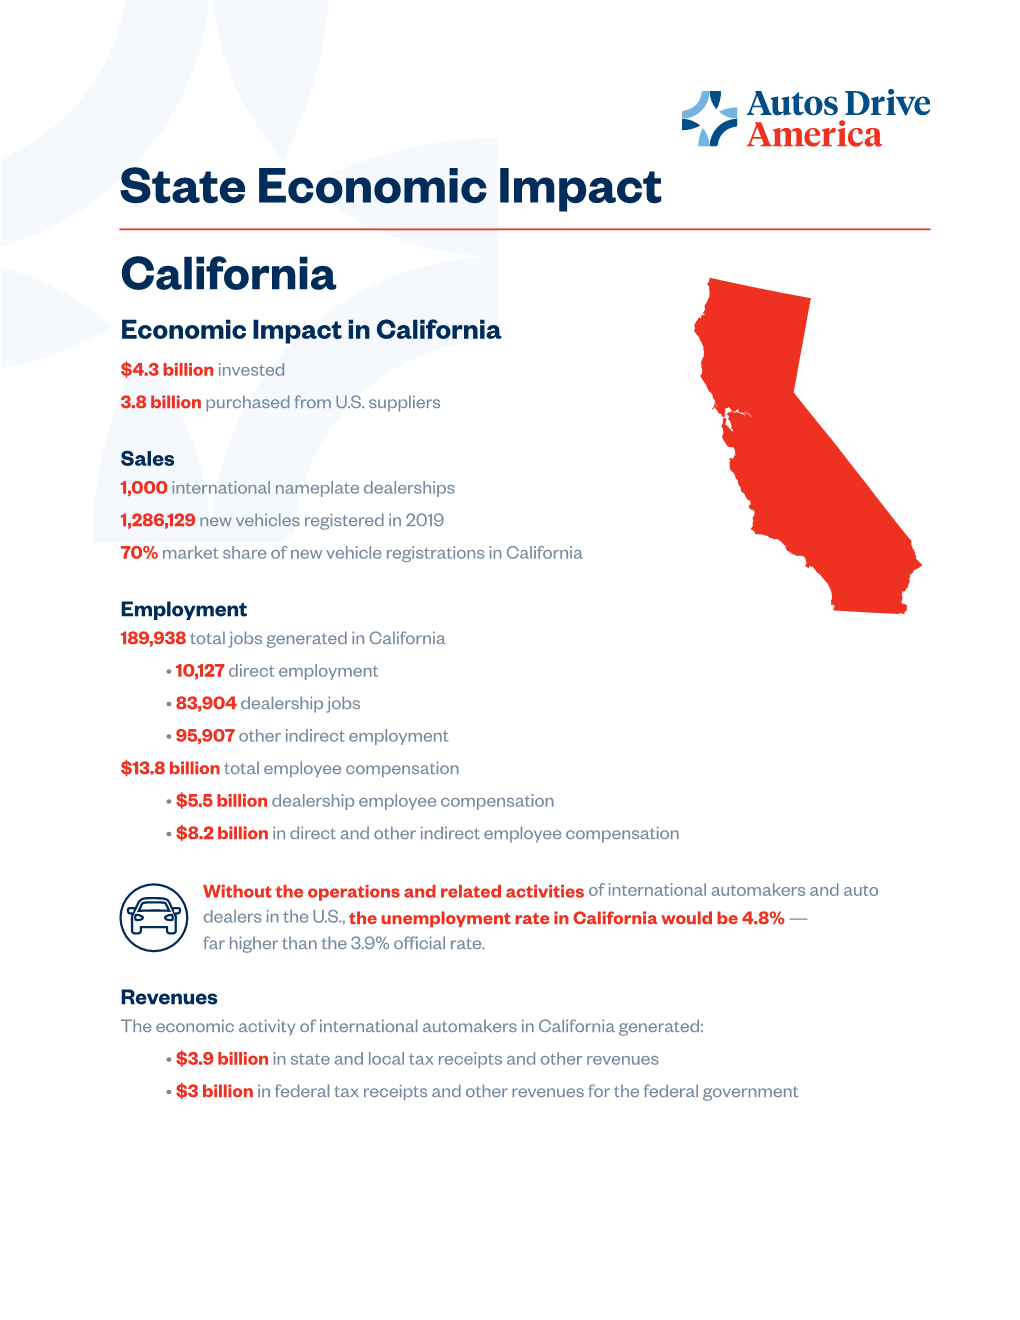 State Economic Impact California Economic Impact in California $4.3 Billion Invested 3.8 Billion Purchased from U.S